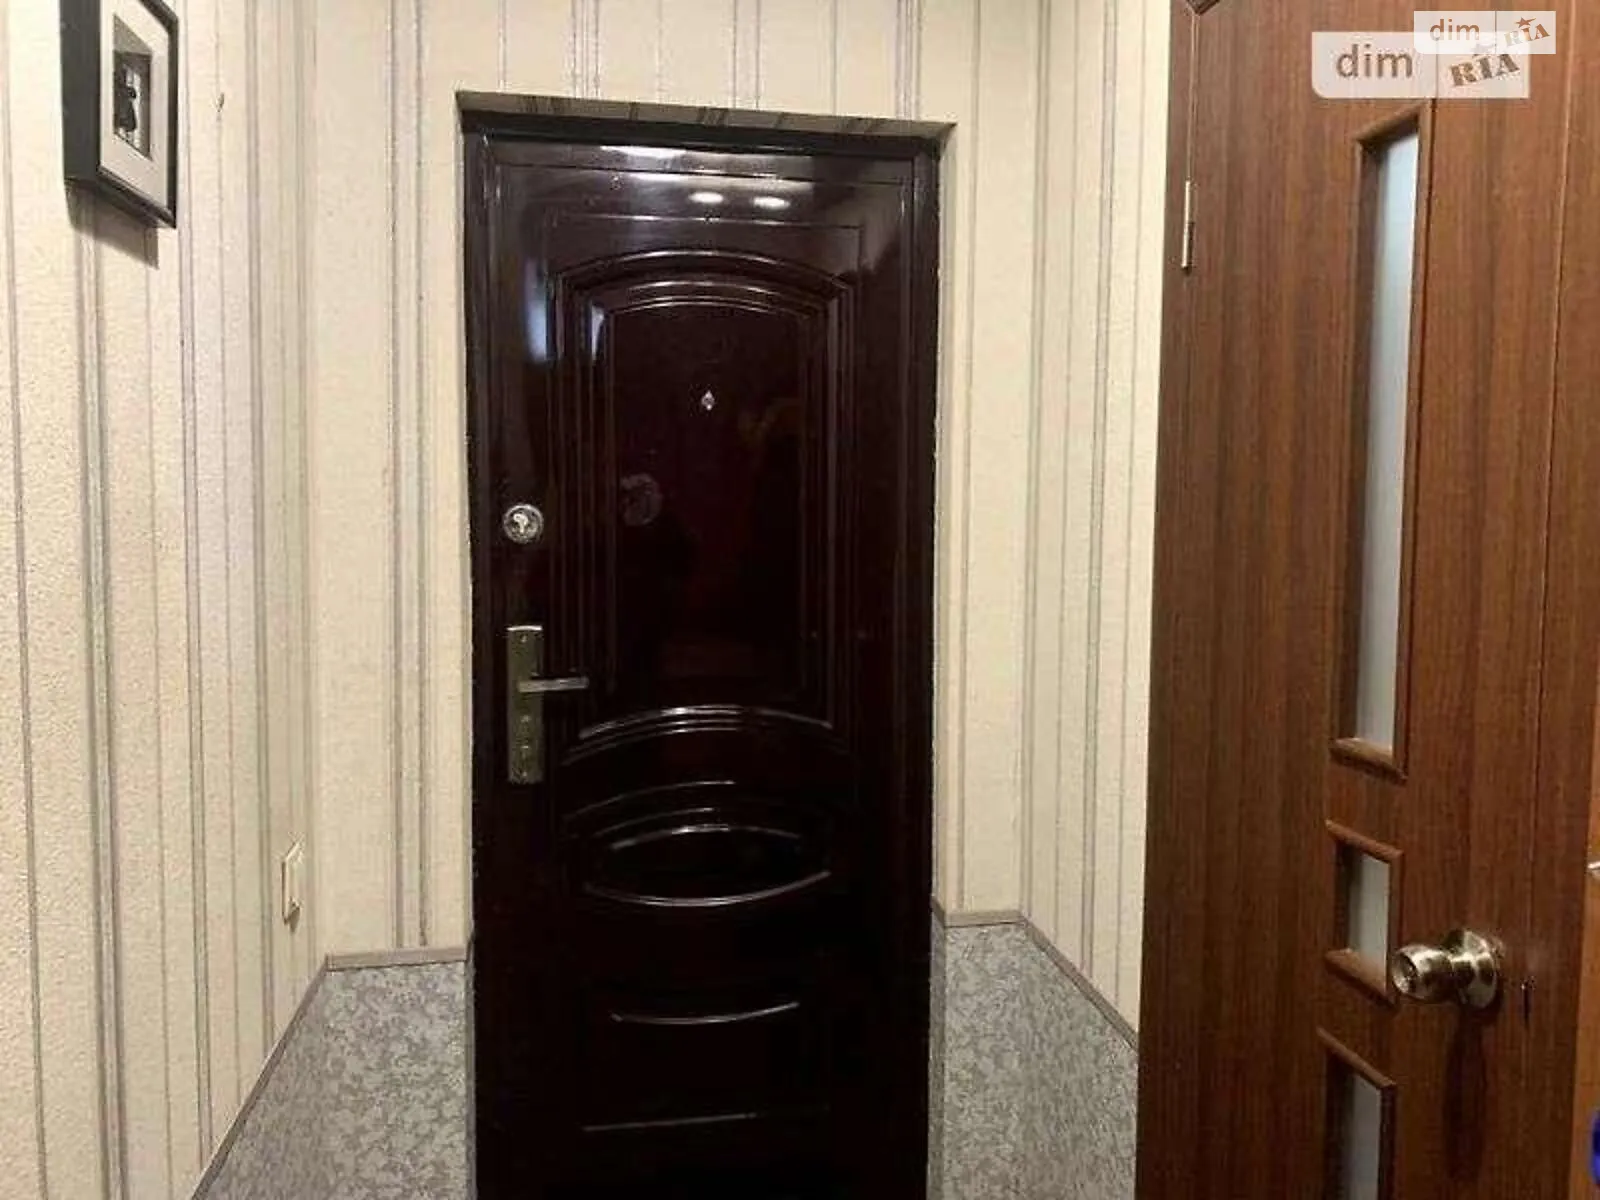 Продается комната 15 кв. м в Харькове - фото 3